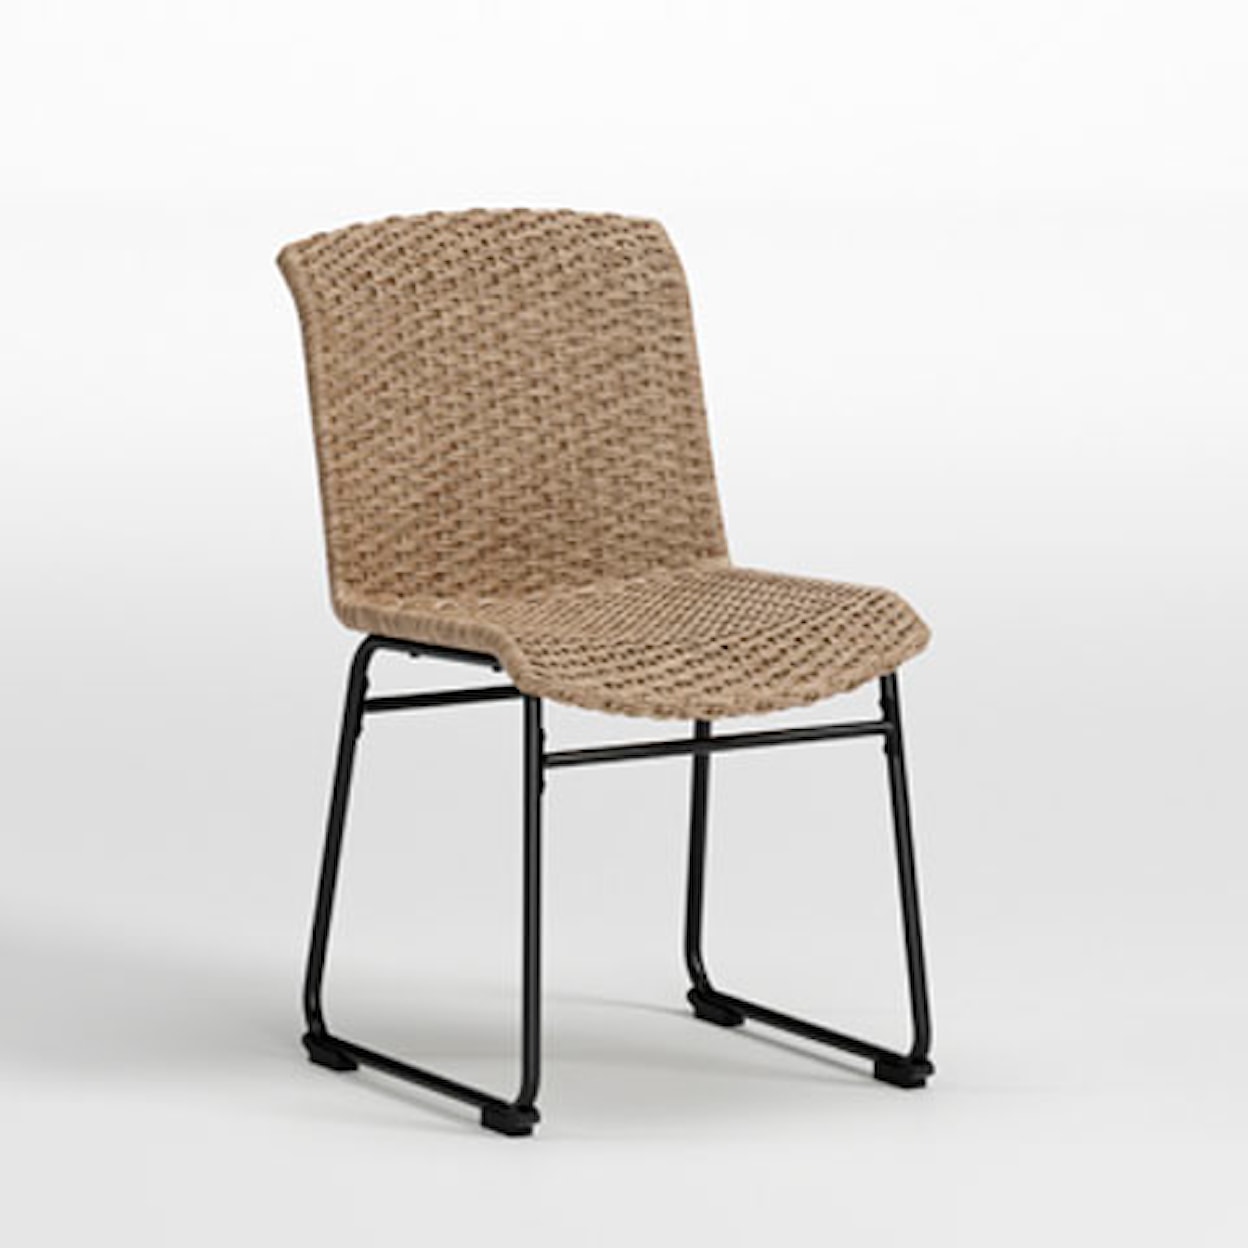 Signature Design Amaris Resin Wicker Outdoor Dining Chair